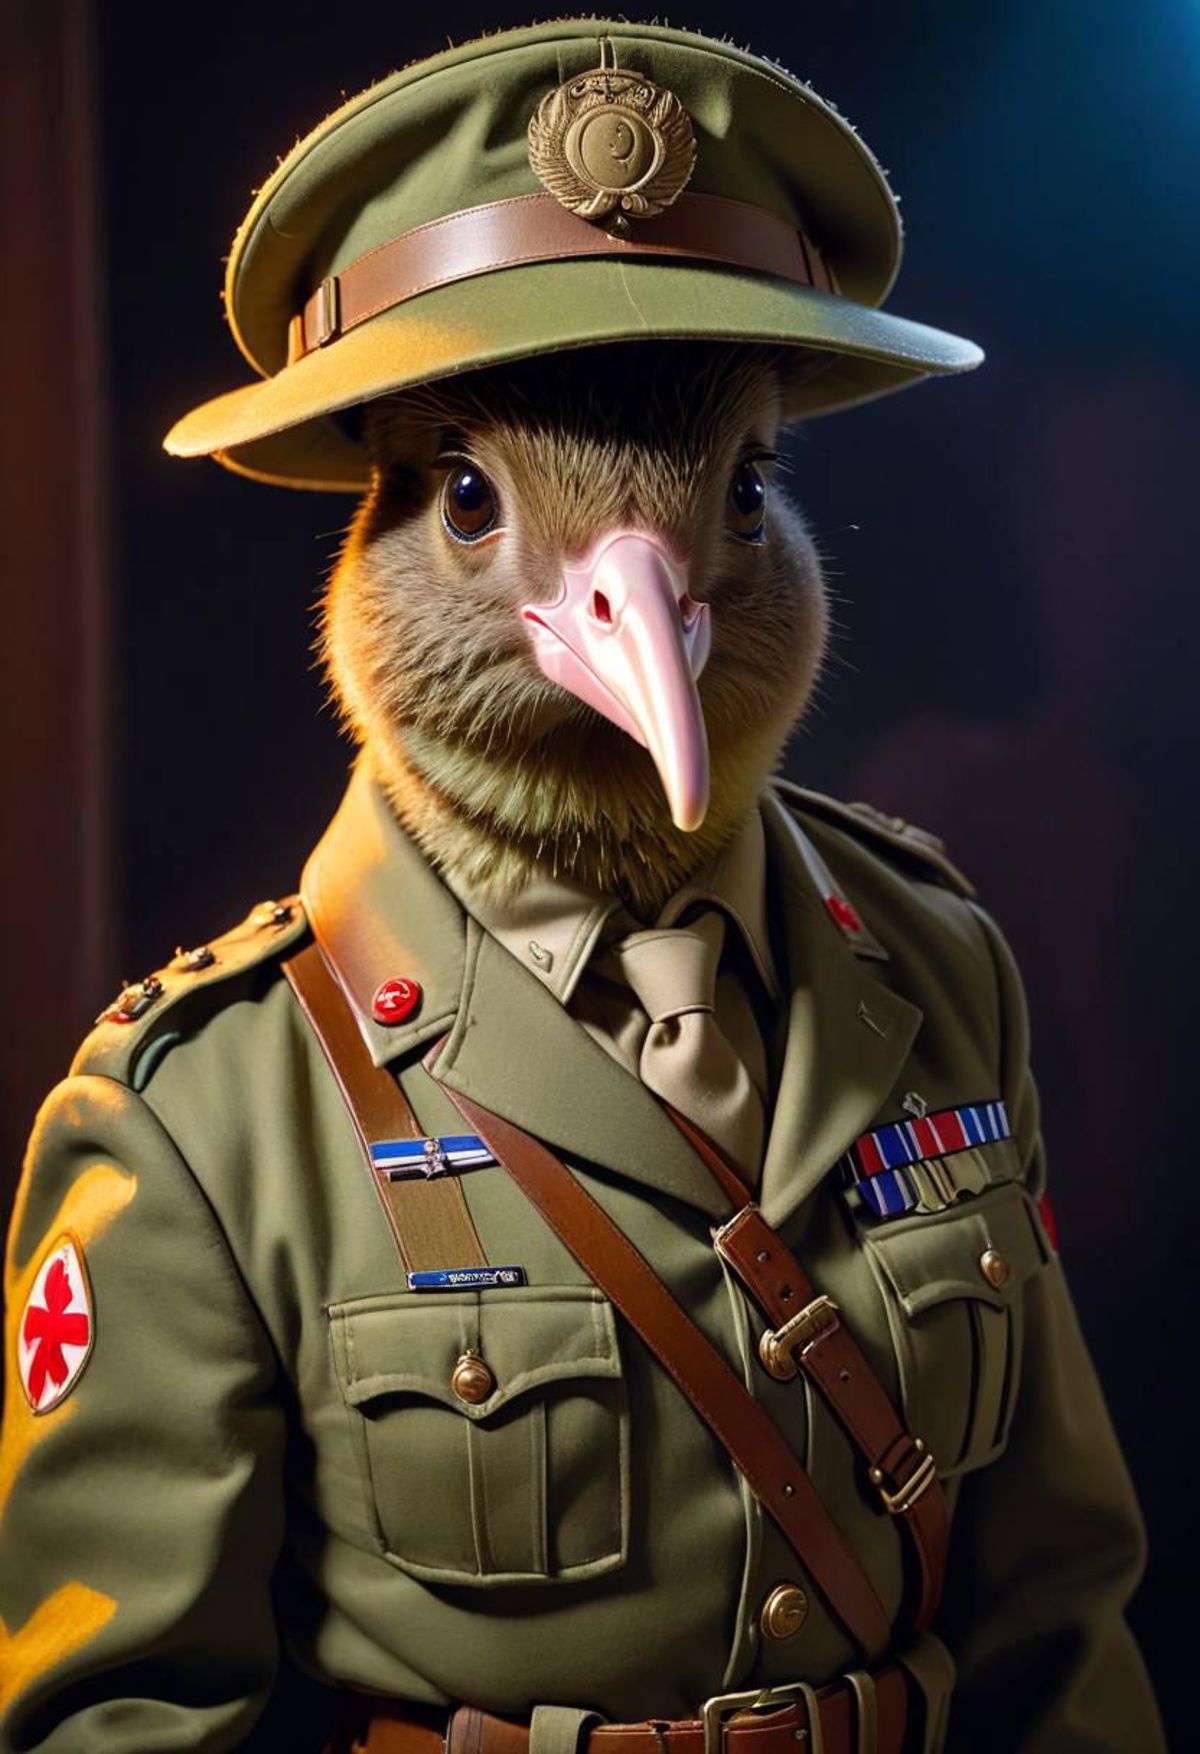 A stuffed animal wearing a uniform and a hat.